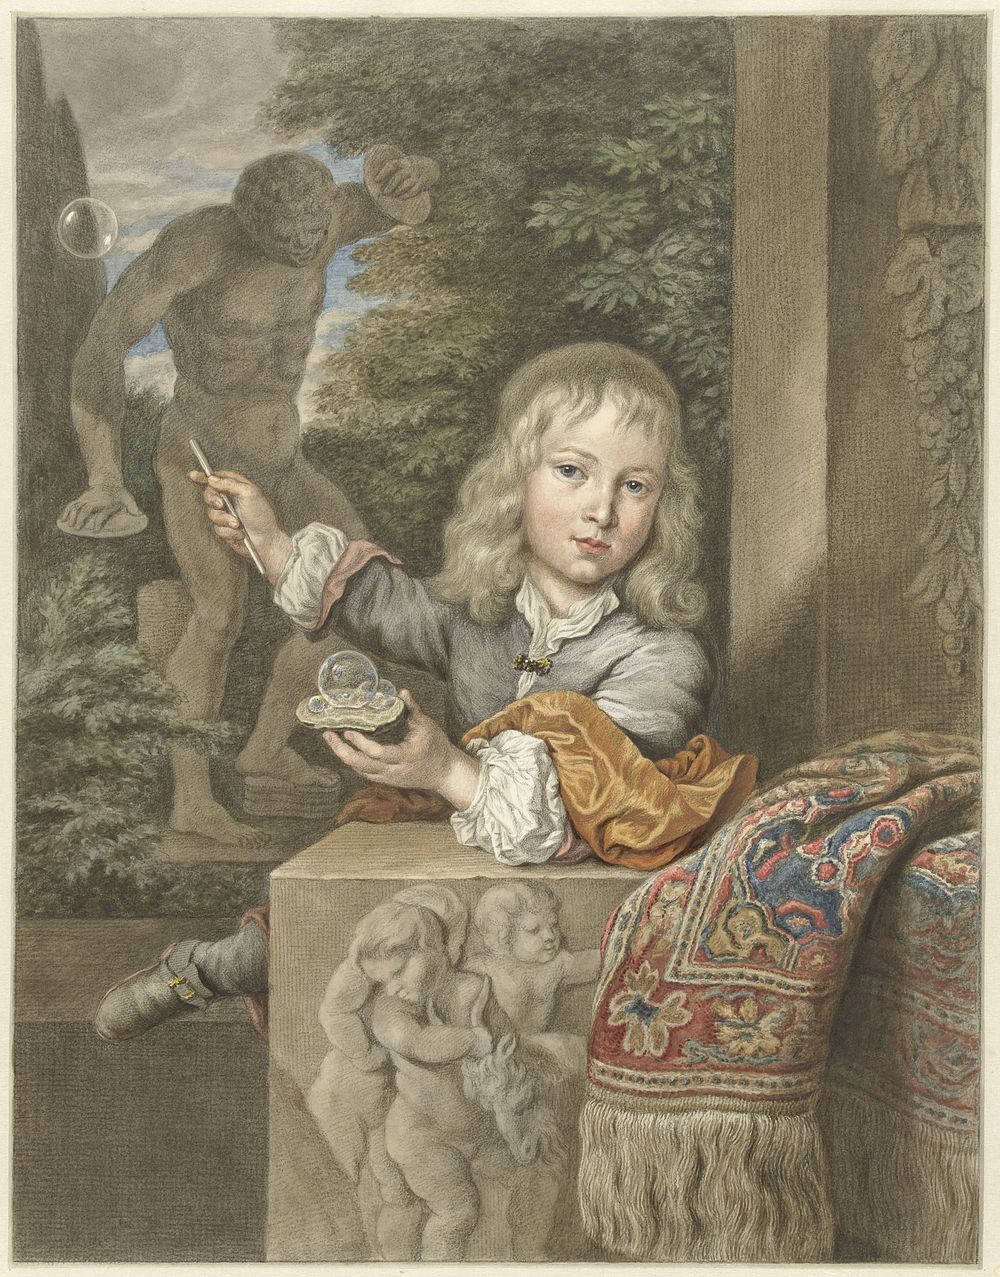 Bellenblazende jongen (1741 - 1820) by Abraham Delfos and Caspar Netscher